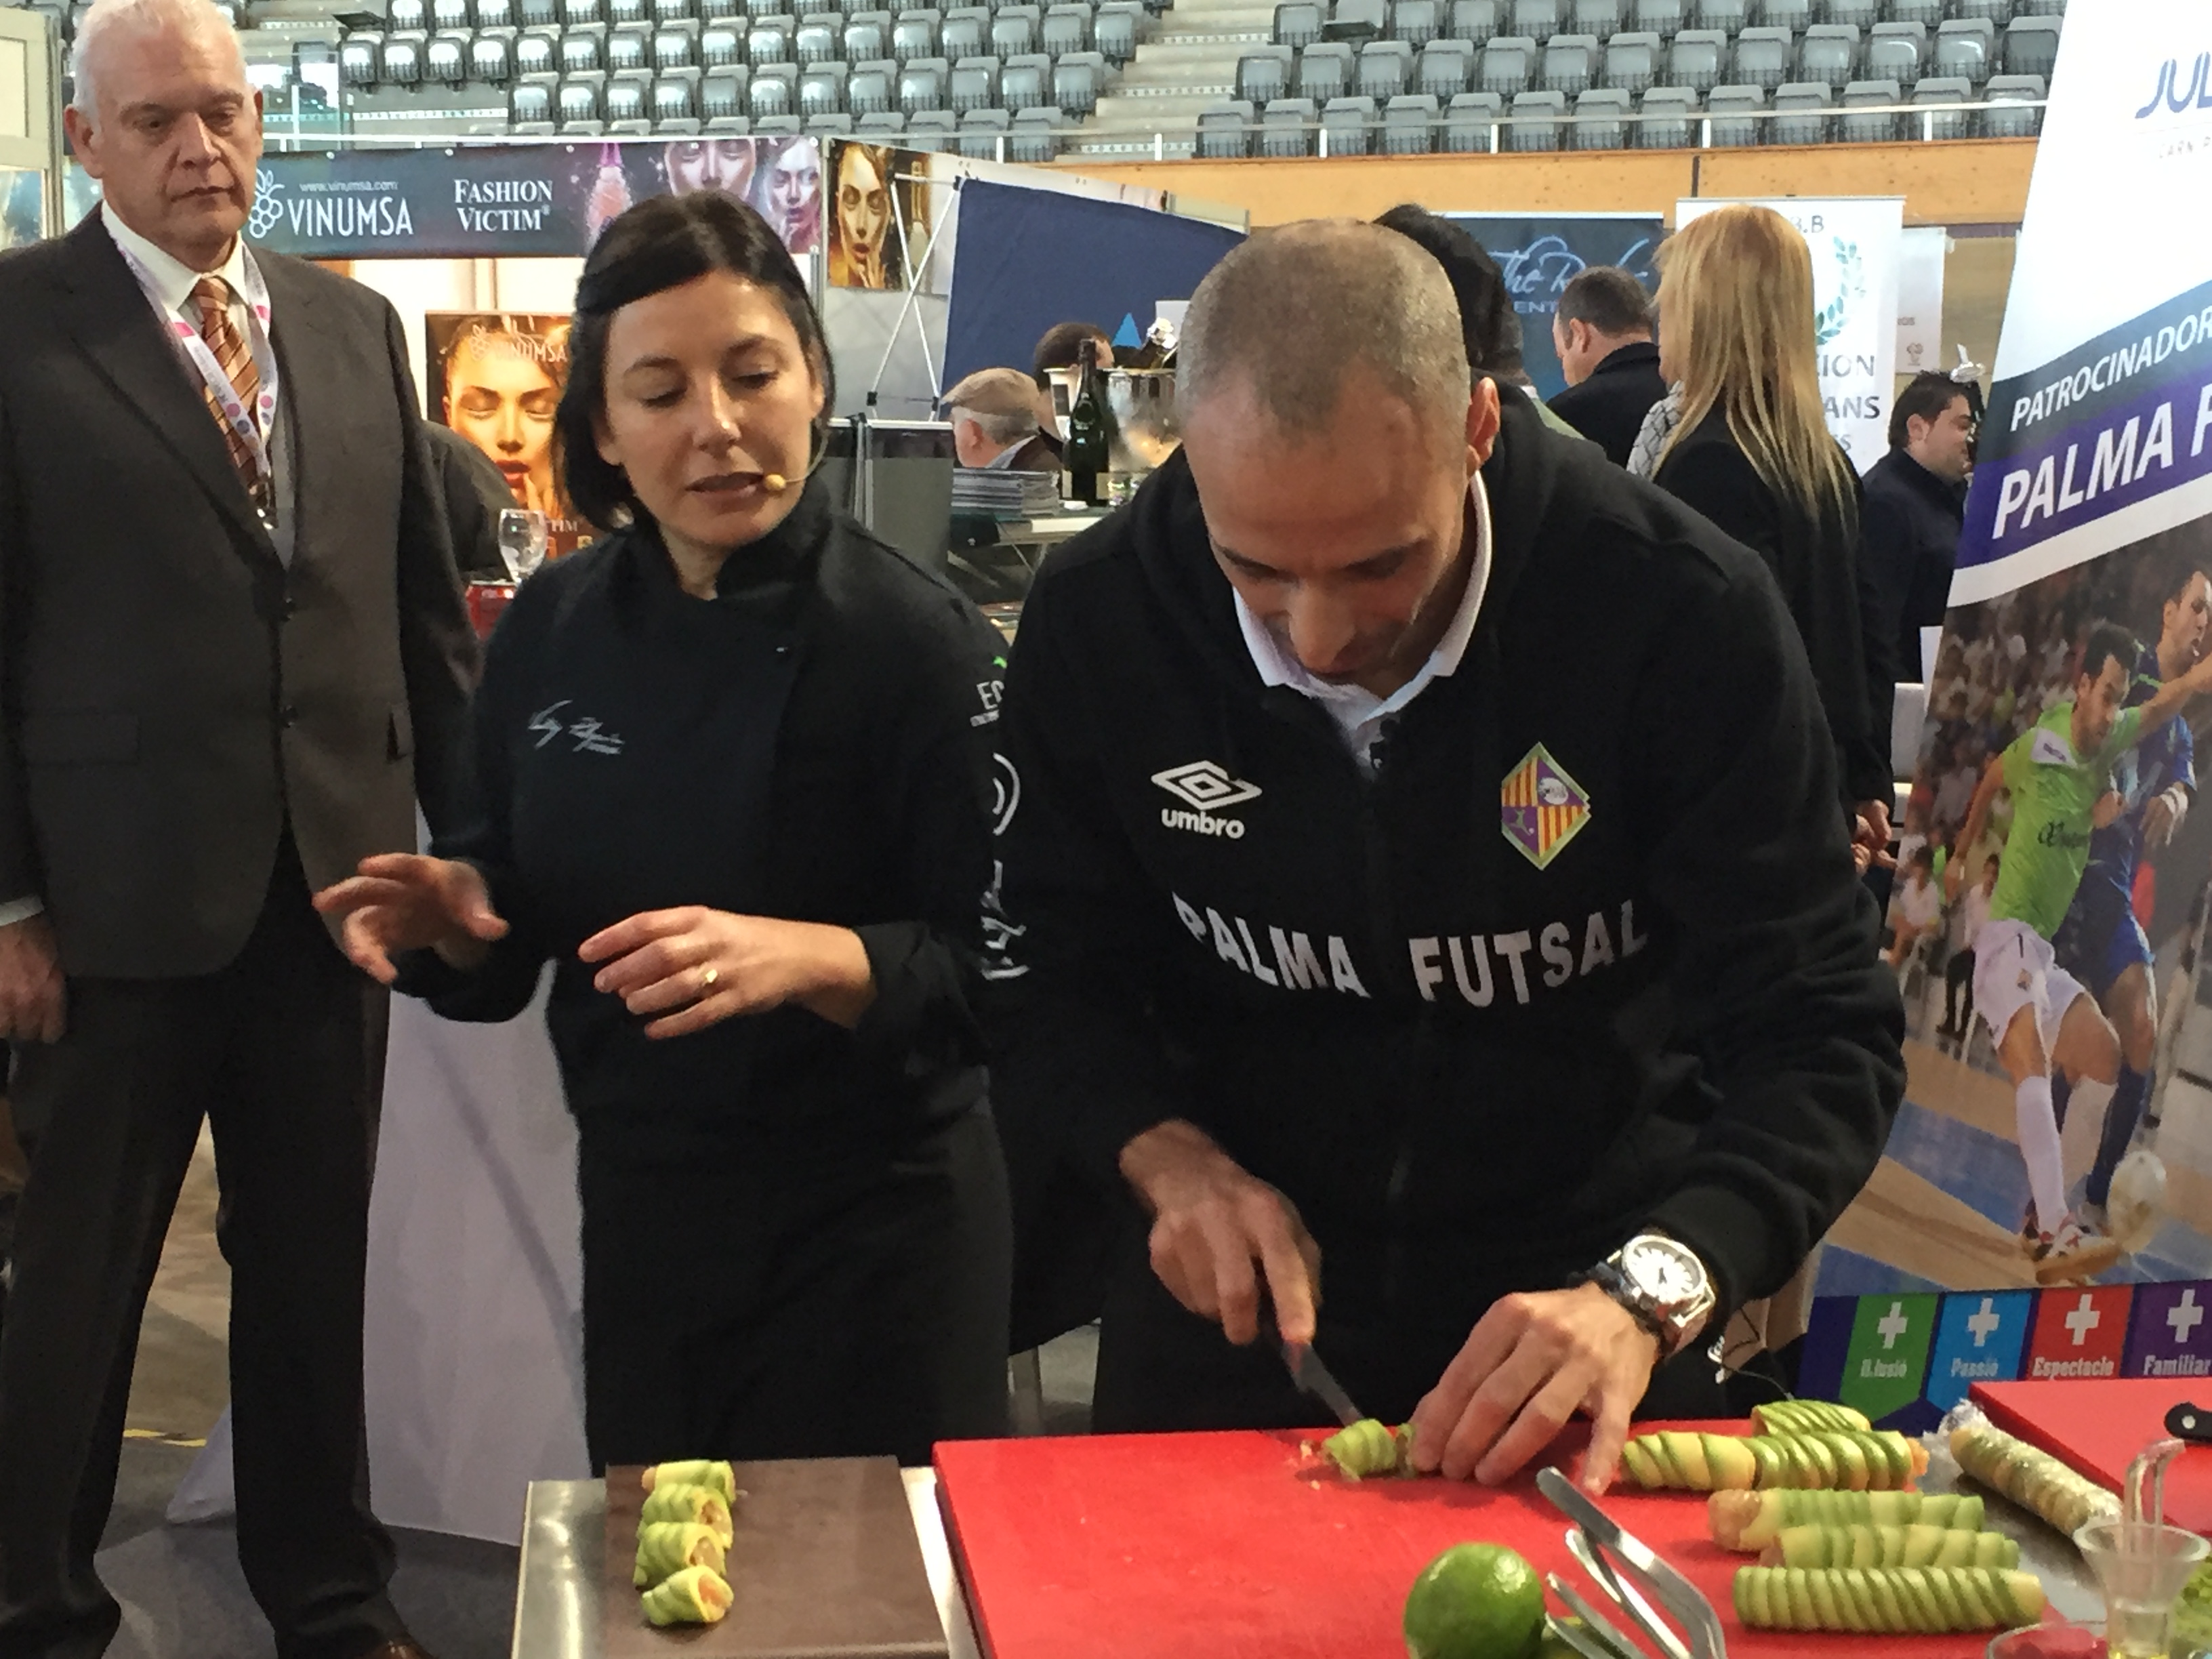 Vadillo y Vicky Pulgarín elaboran la tapa del Palma Futsal (3)